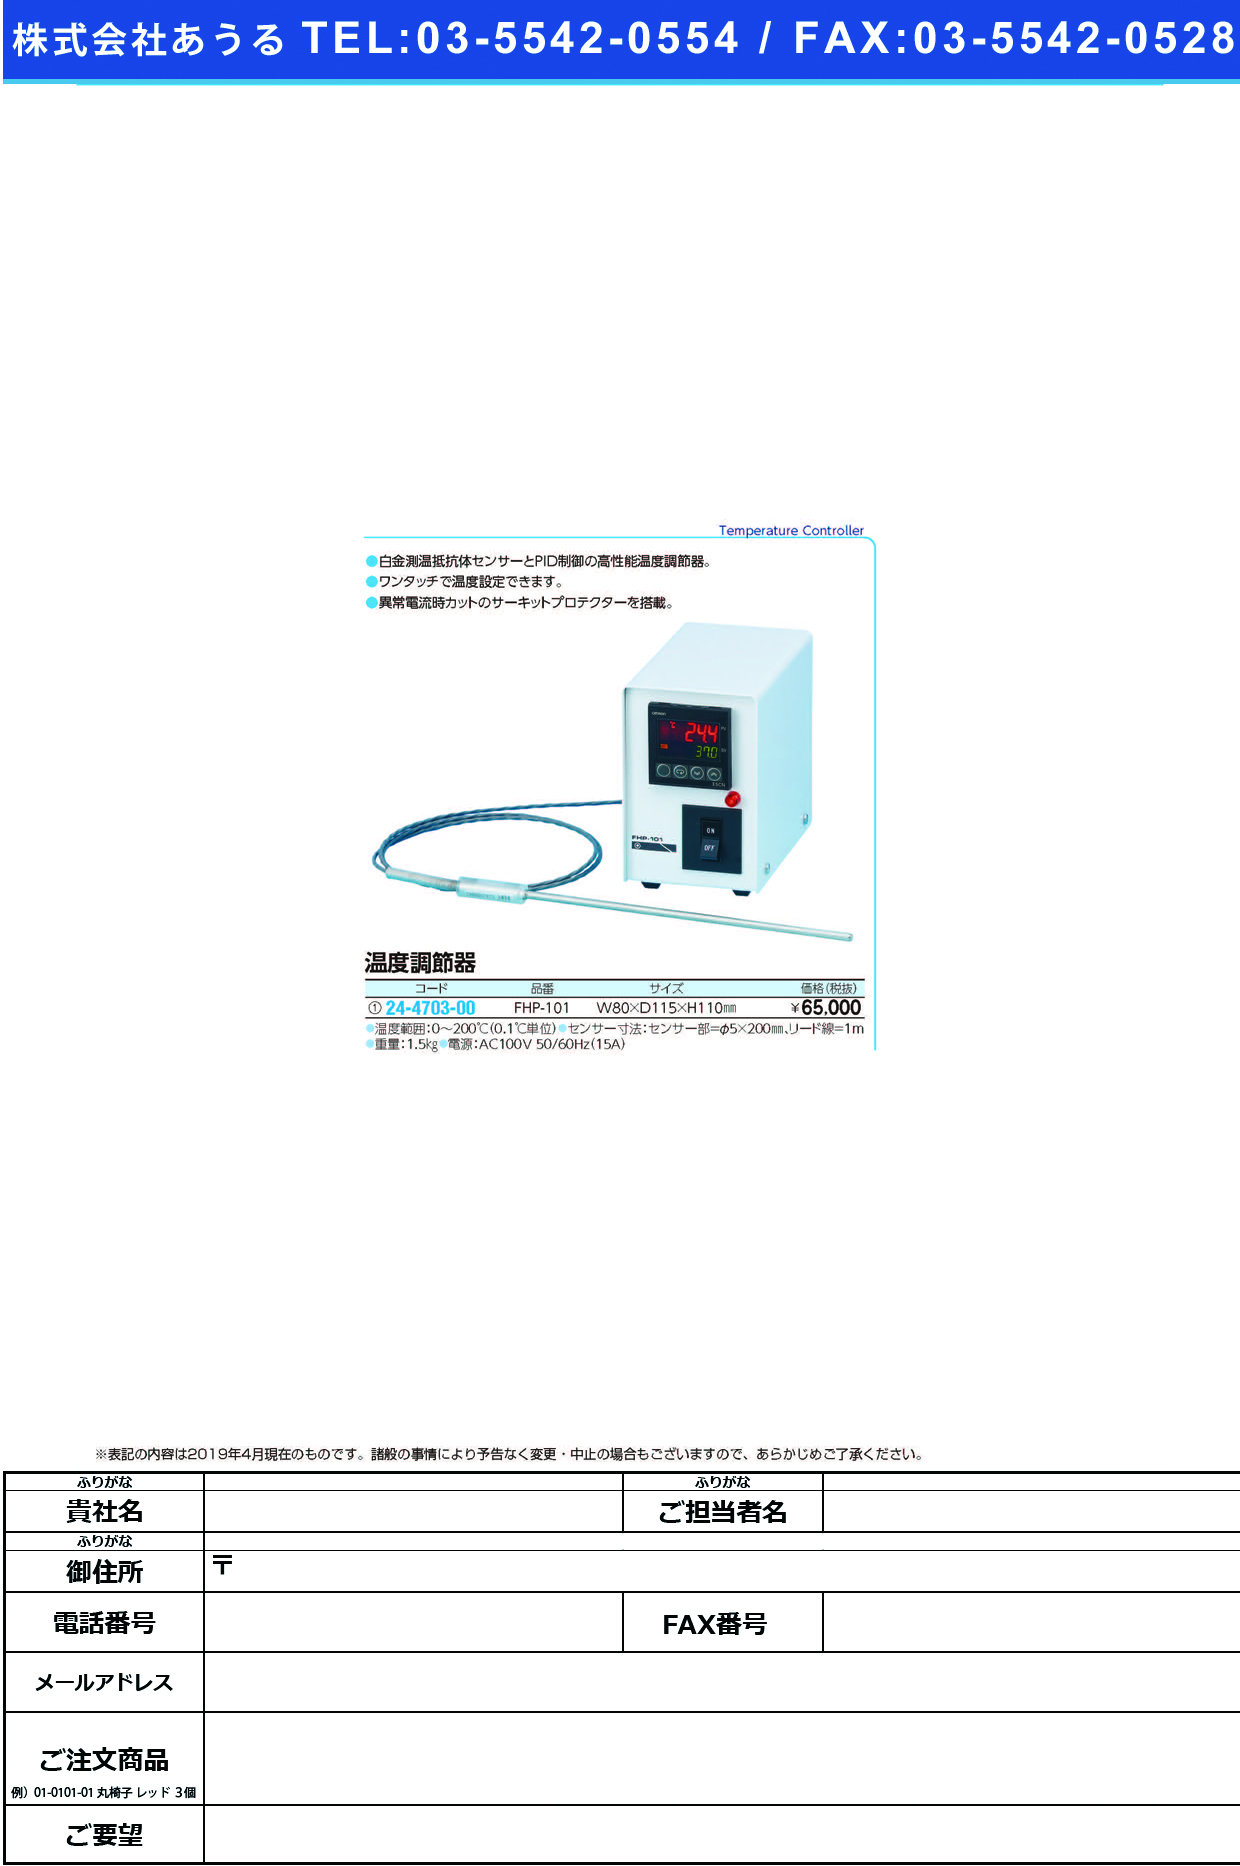 (24-4703-00)Ｆｉｎｅ温度調節器 FHP-101 ｵﾝﾄﾞﾁｮｳｾﾂｷ【1台単位】【2019年カタログ商品】